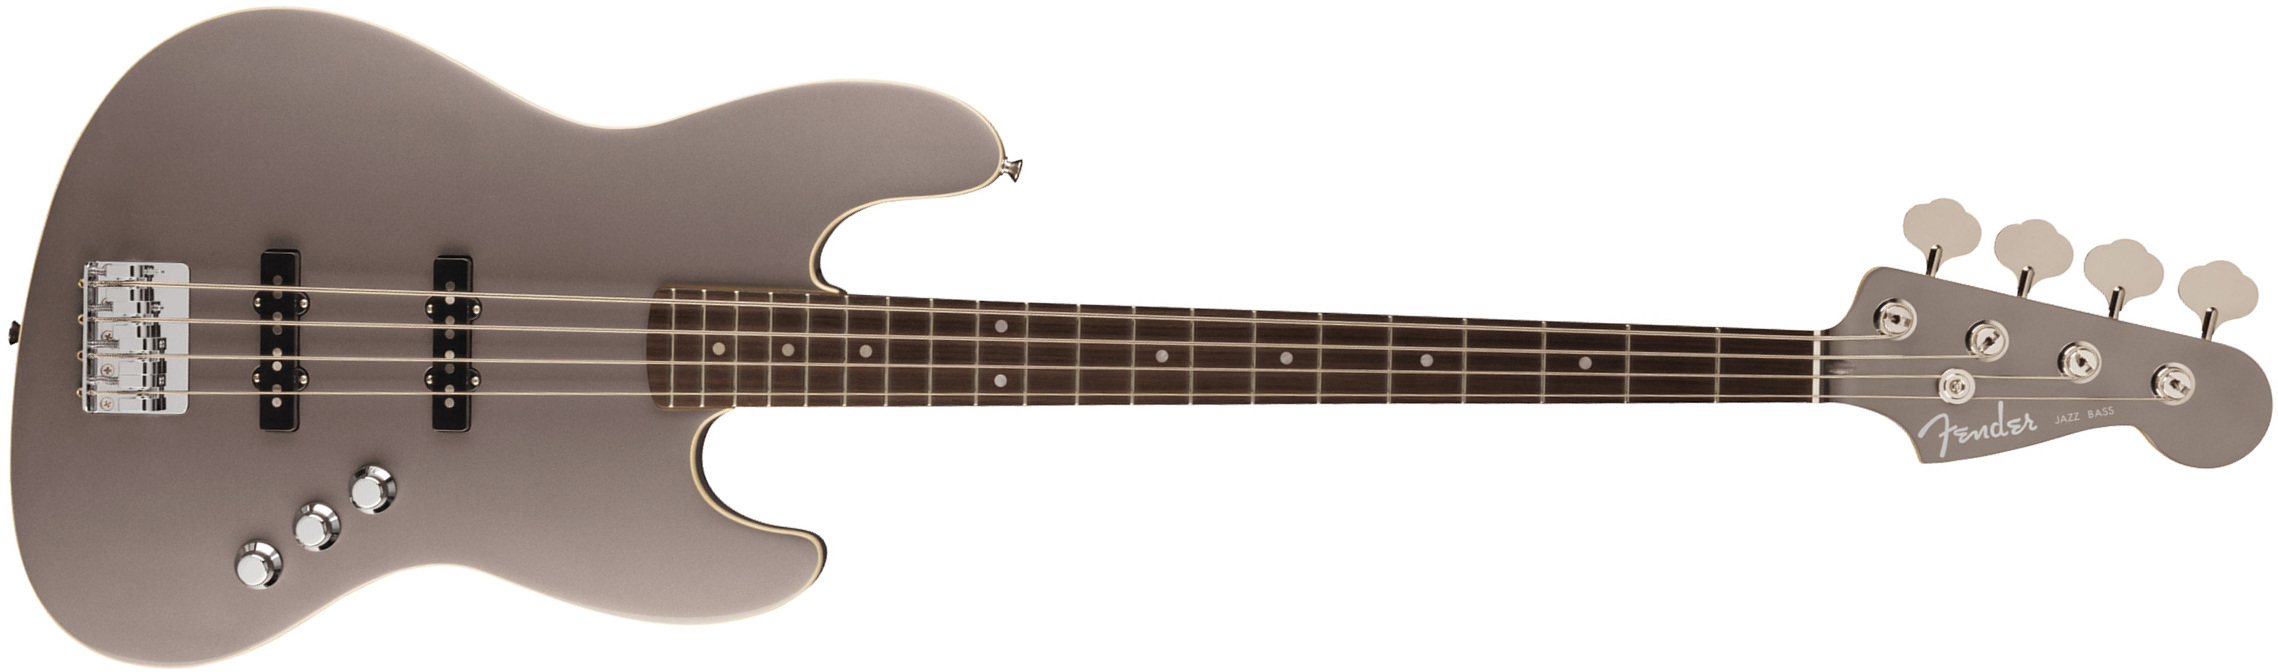 Fender Jazz Bass Aerodyne Special Jap Rw - Dolphin Gray Metallic - Solid body elektrische bas - Main picture